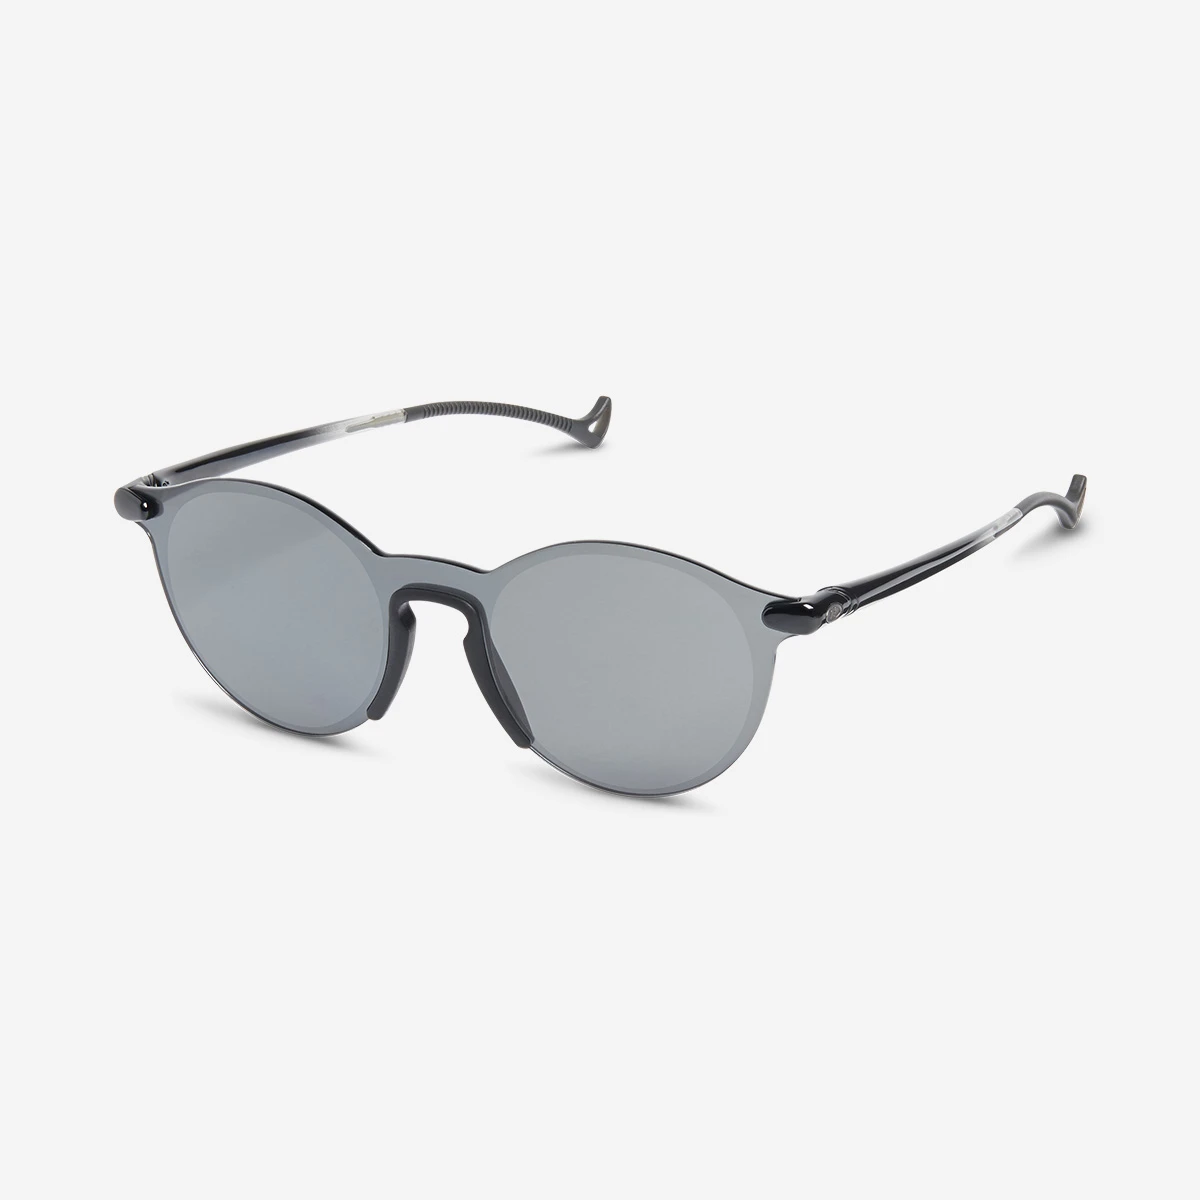 Nooz Optics - Anti-Glare & Cat 3 Sports Sunglasses - Round - 3 Colors